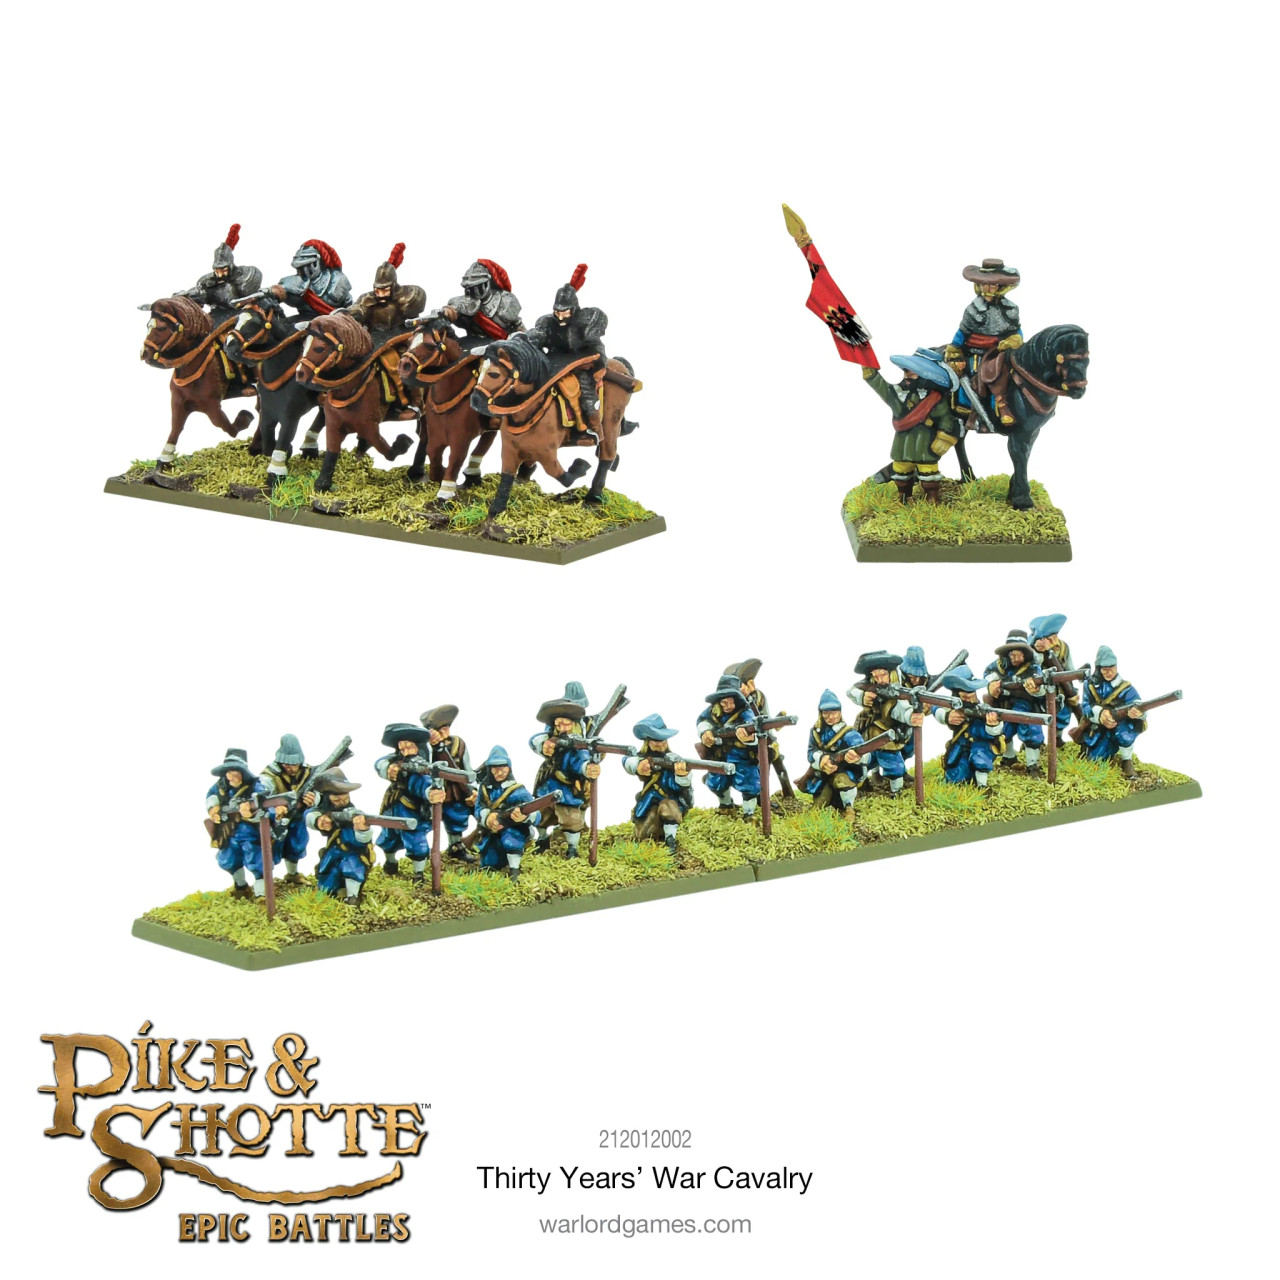 Pike & Shotte: Epic Battles - Thirty Year's War Cavalry